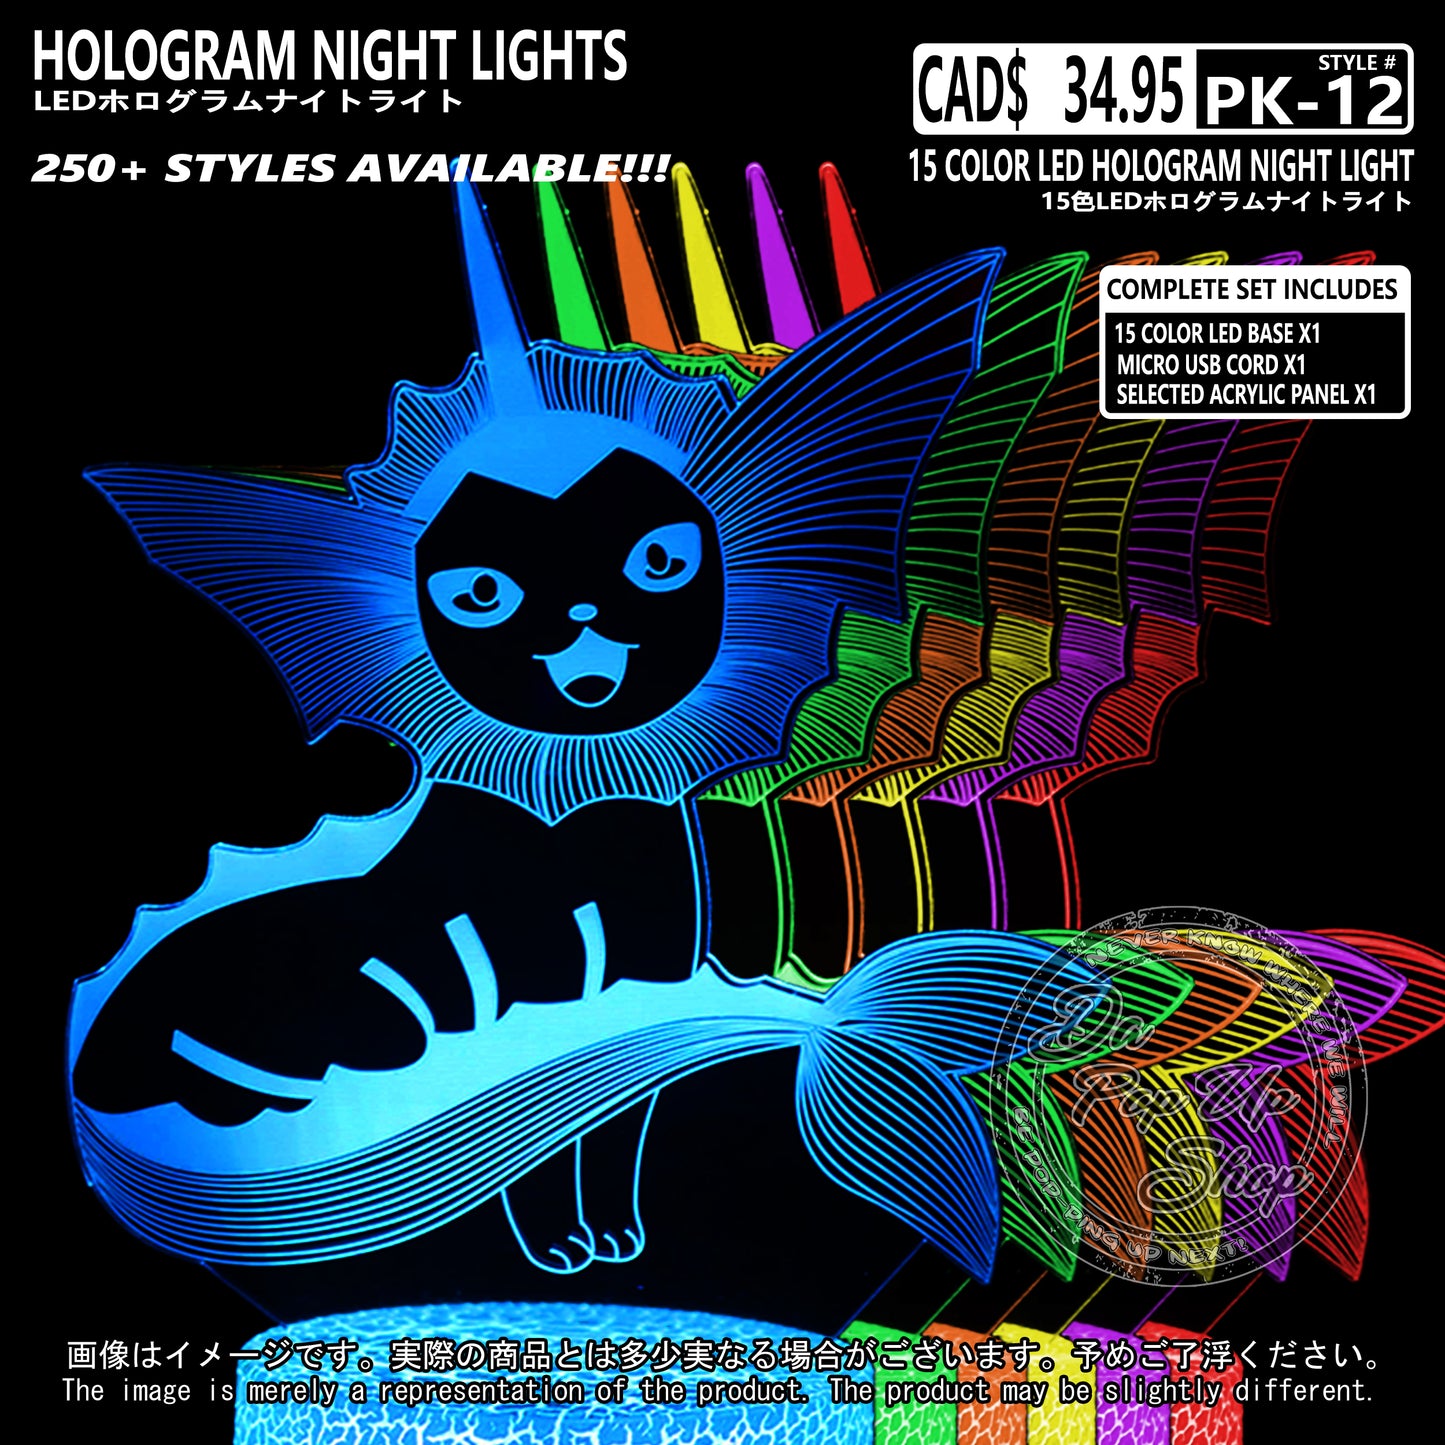 (PKM-12) VAPOREON Pokemon Hologram LED Night Light